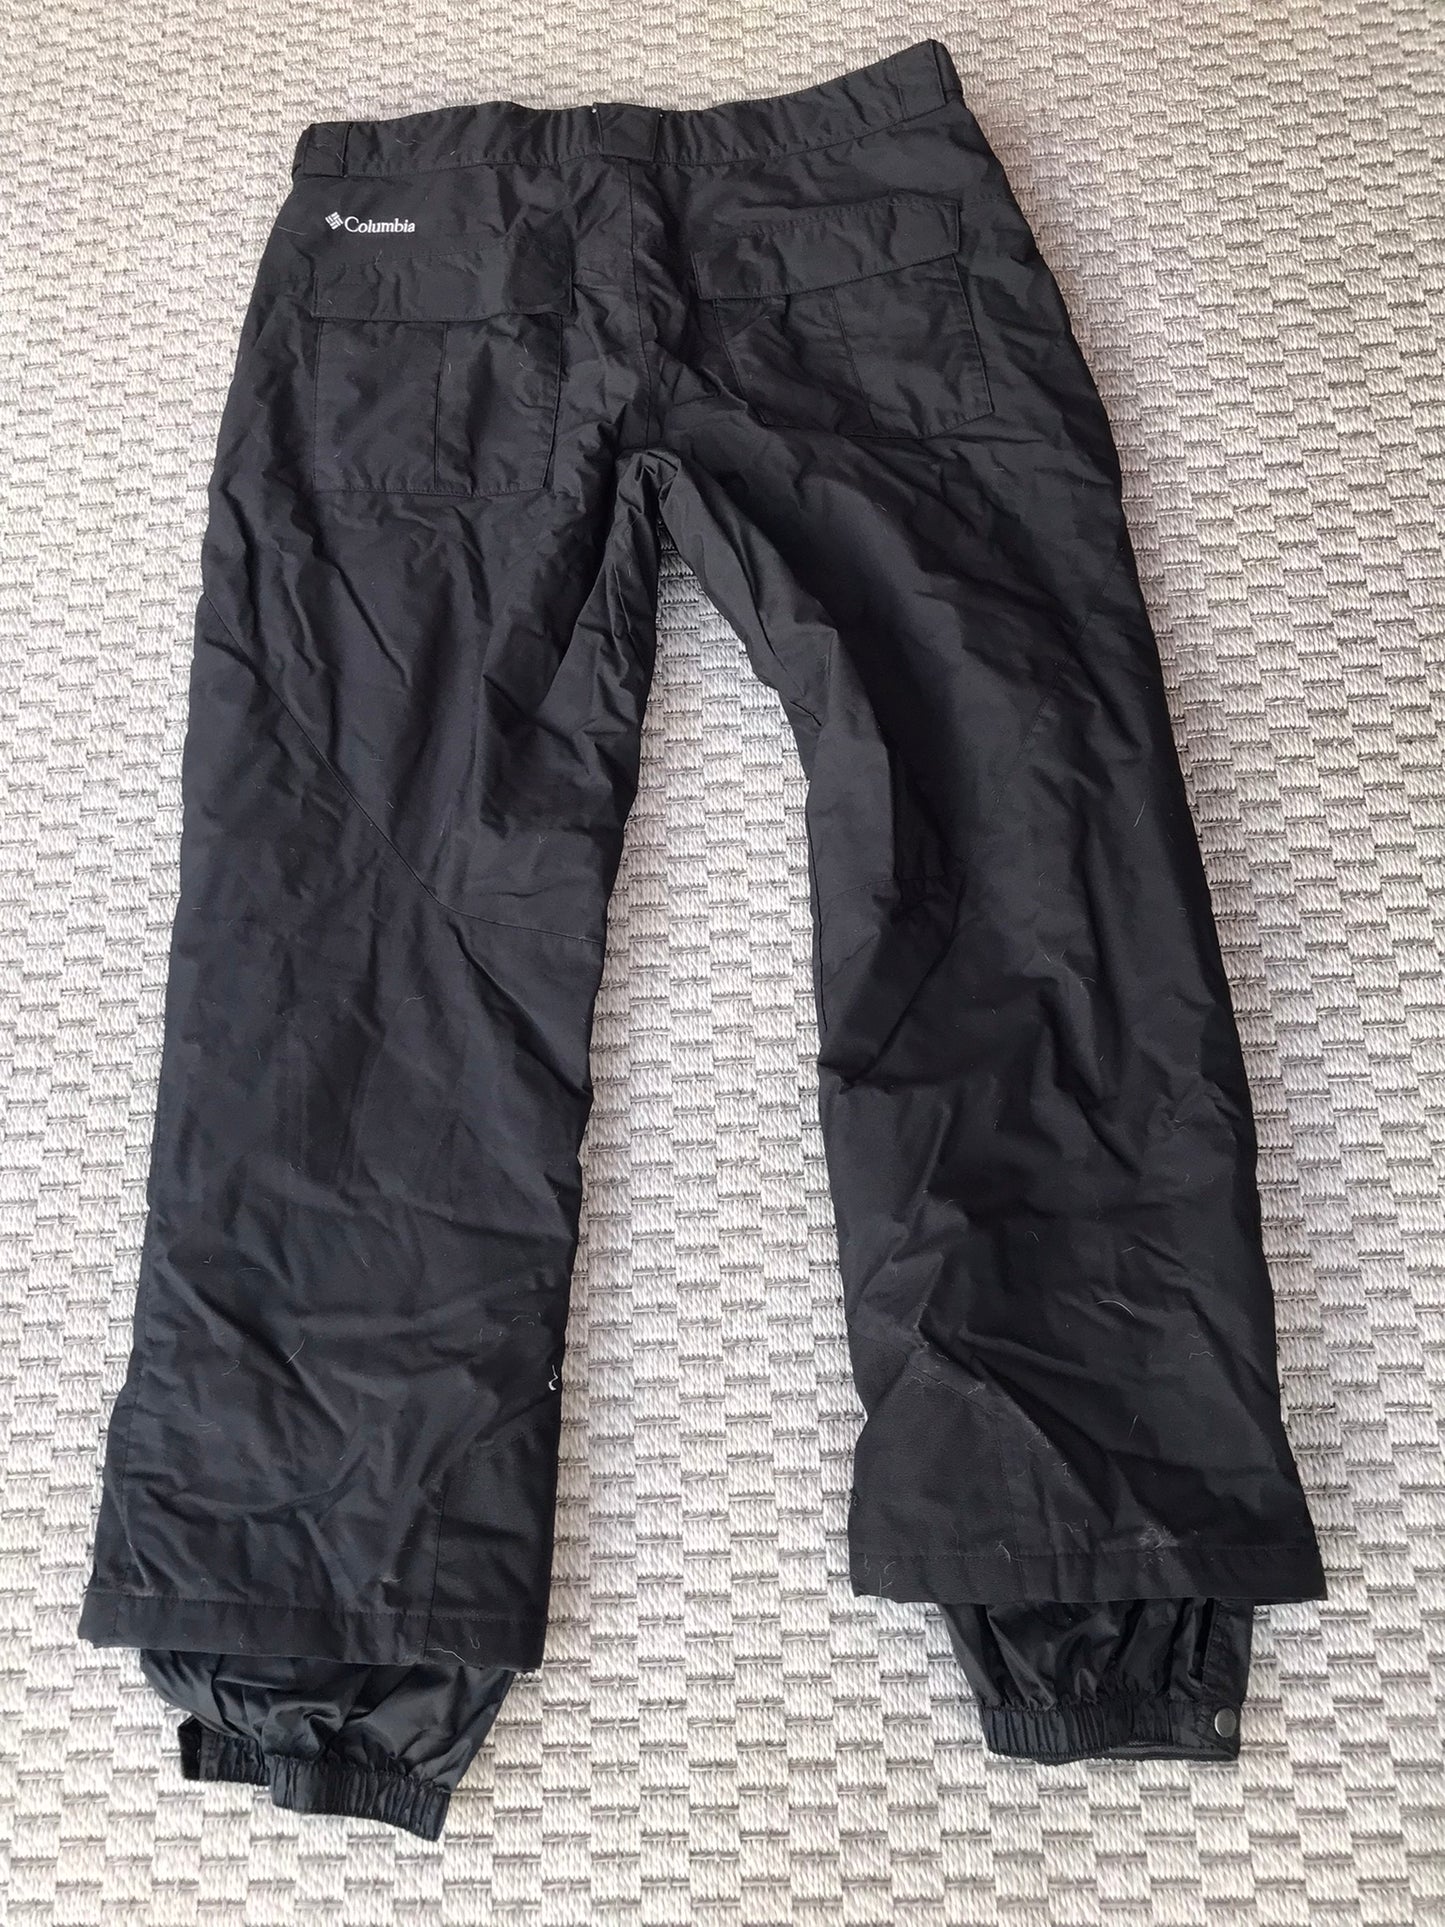 Snow Pants Men's XX-Large Columbia Black Outstanding Quality